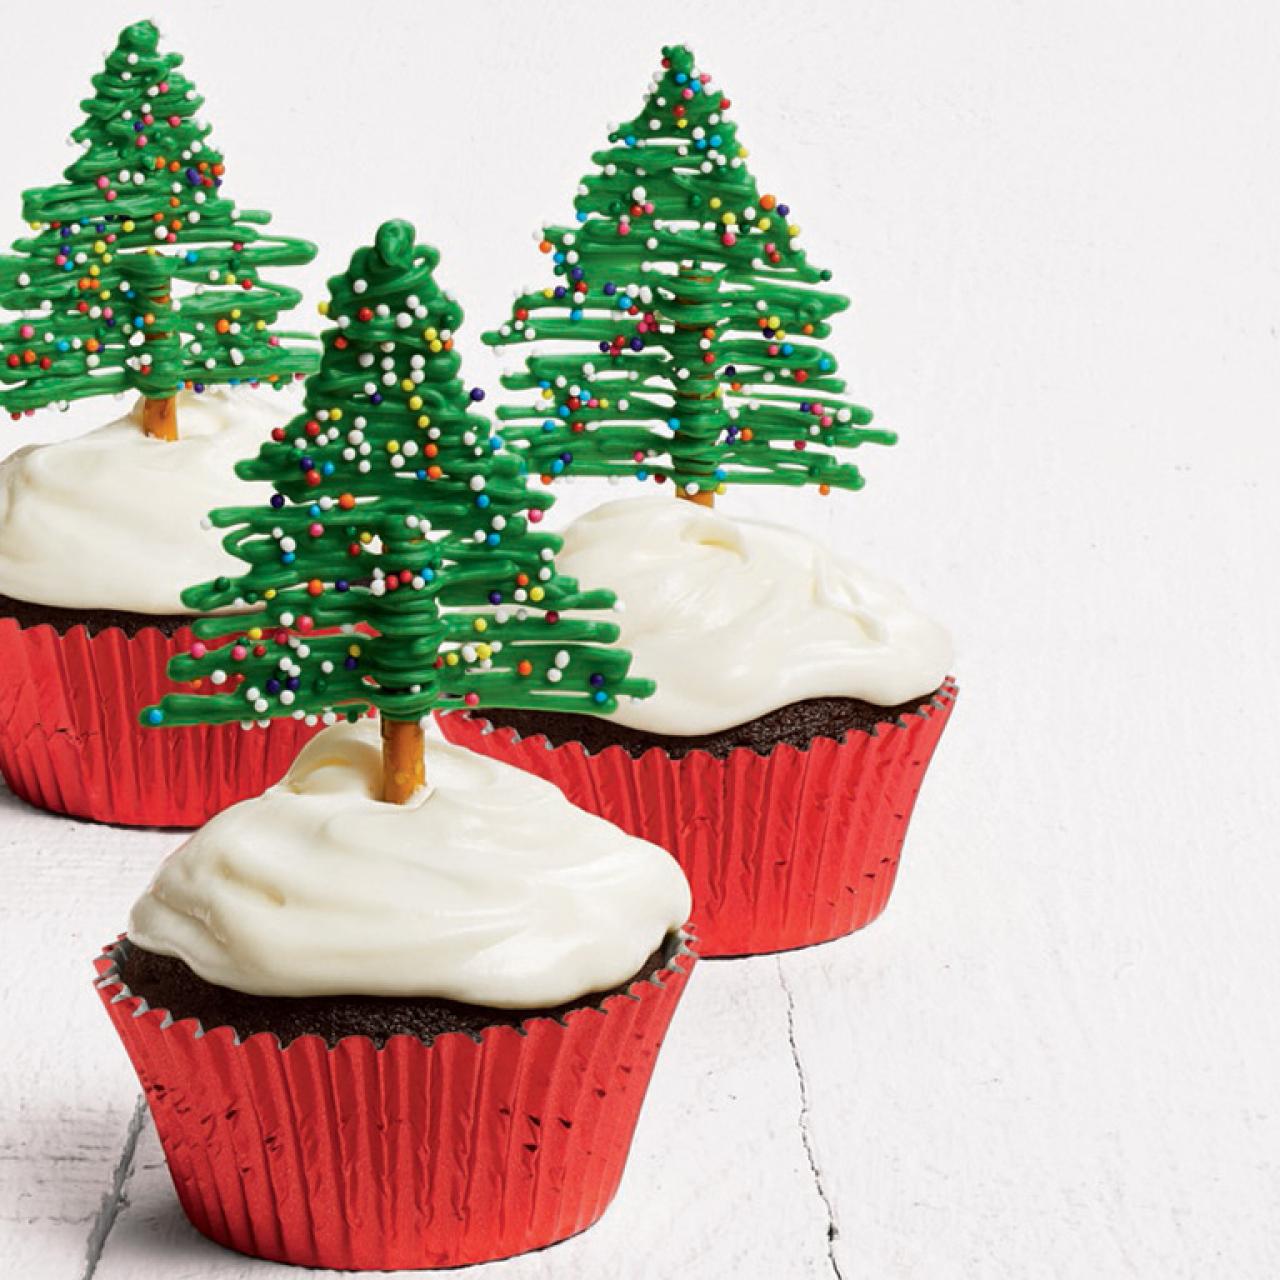 https://food.fnr.sndimg.com/content/dam/images/food/fullset/2019/11/21/0/FNM_120119-Christmas-Tree-Cupcakes_s4x3.jpg.rend.hgtvcom.1280.1280.suffix/1574360783371.jpeg